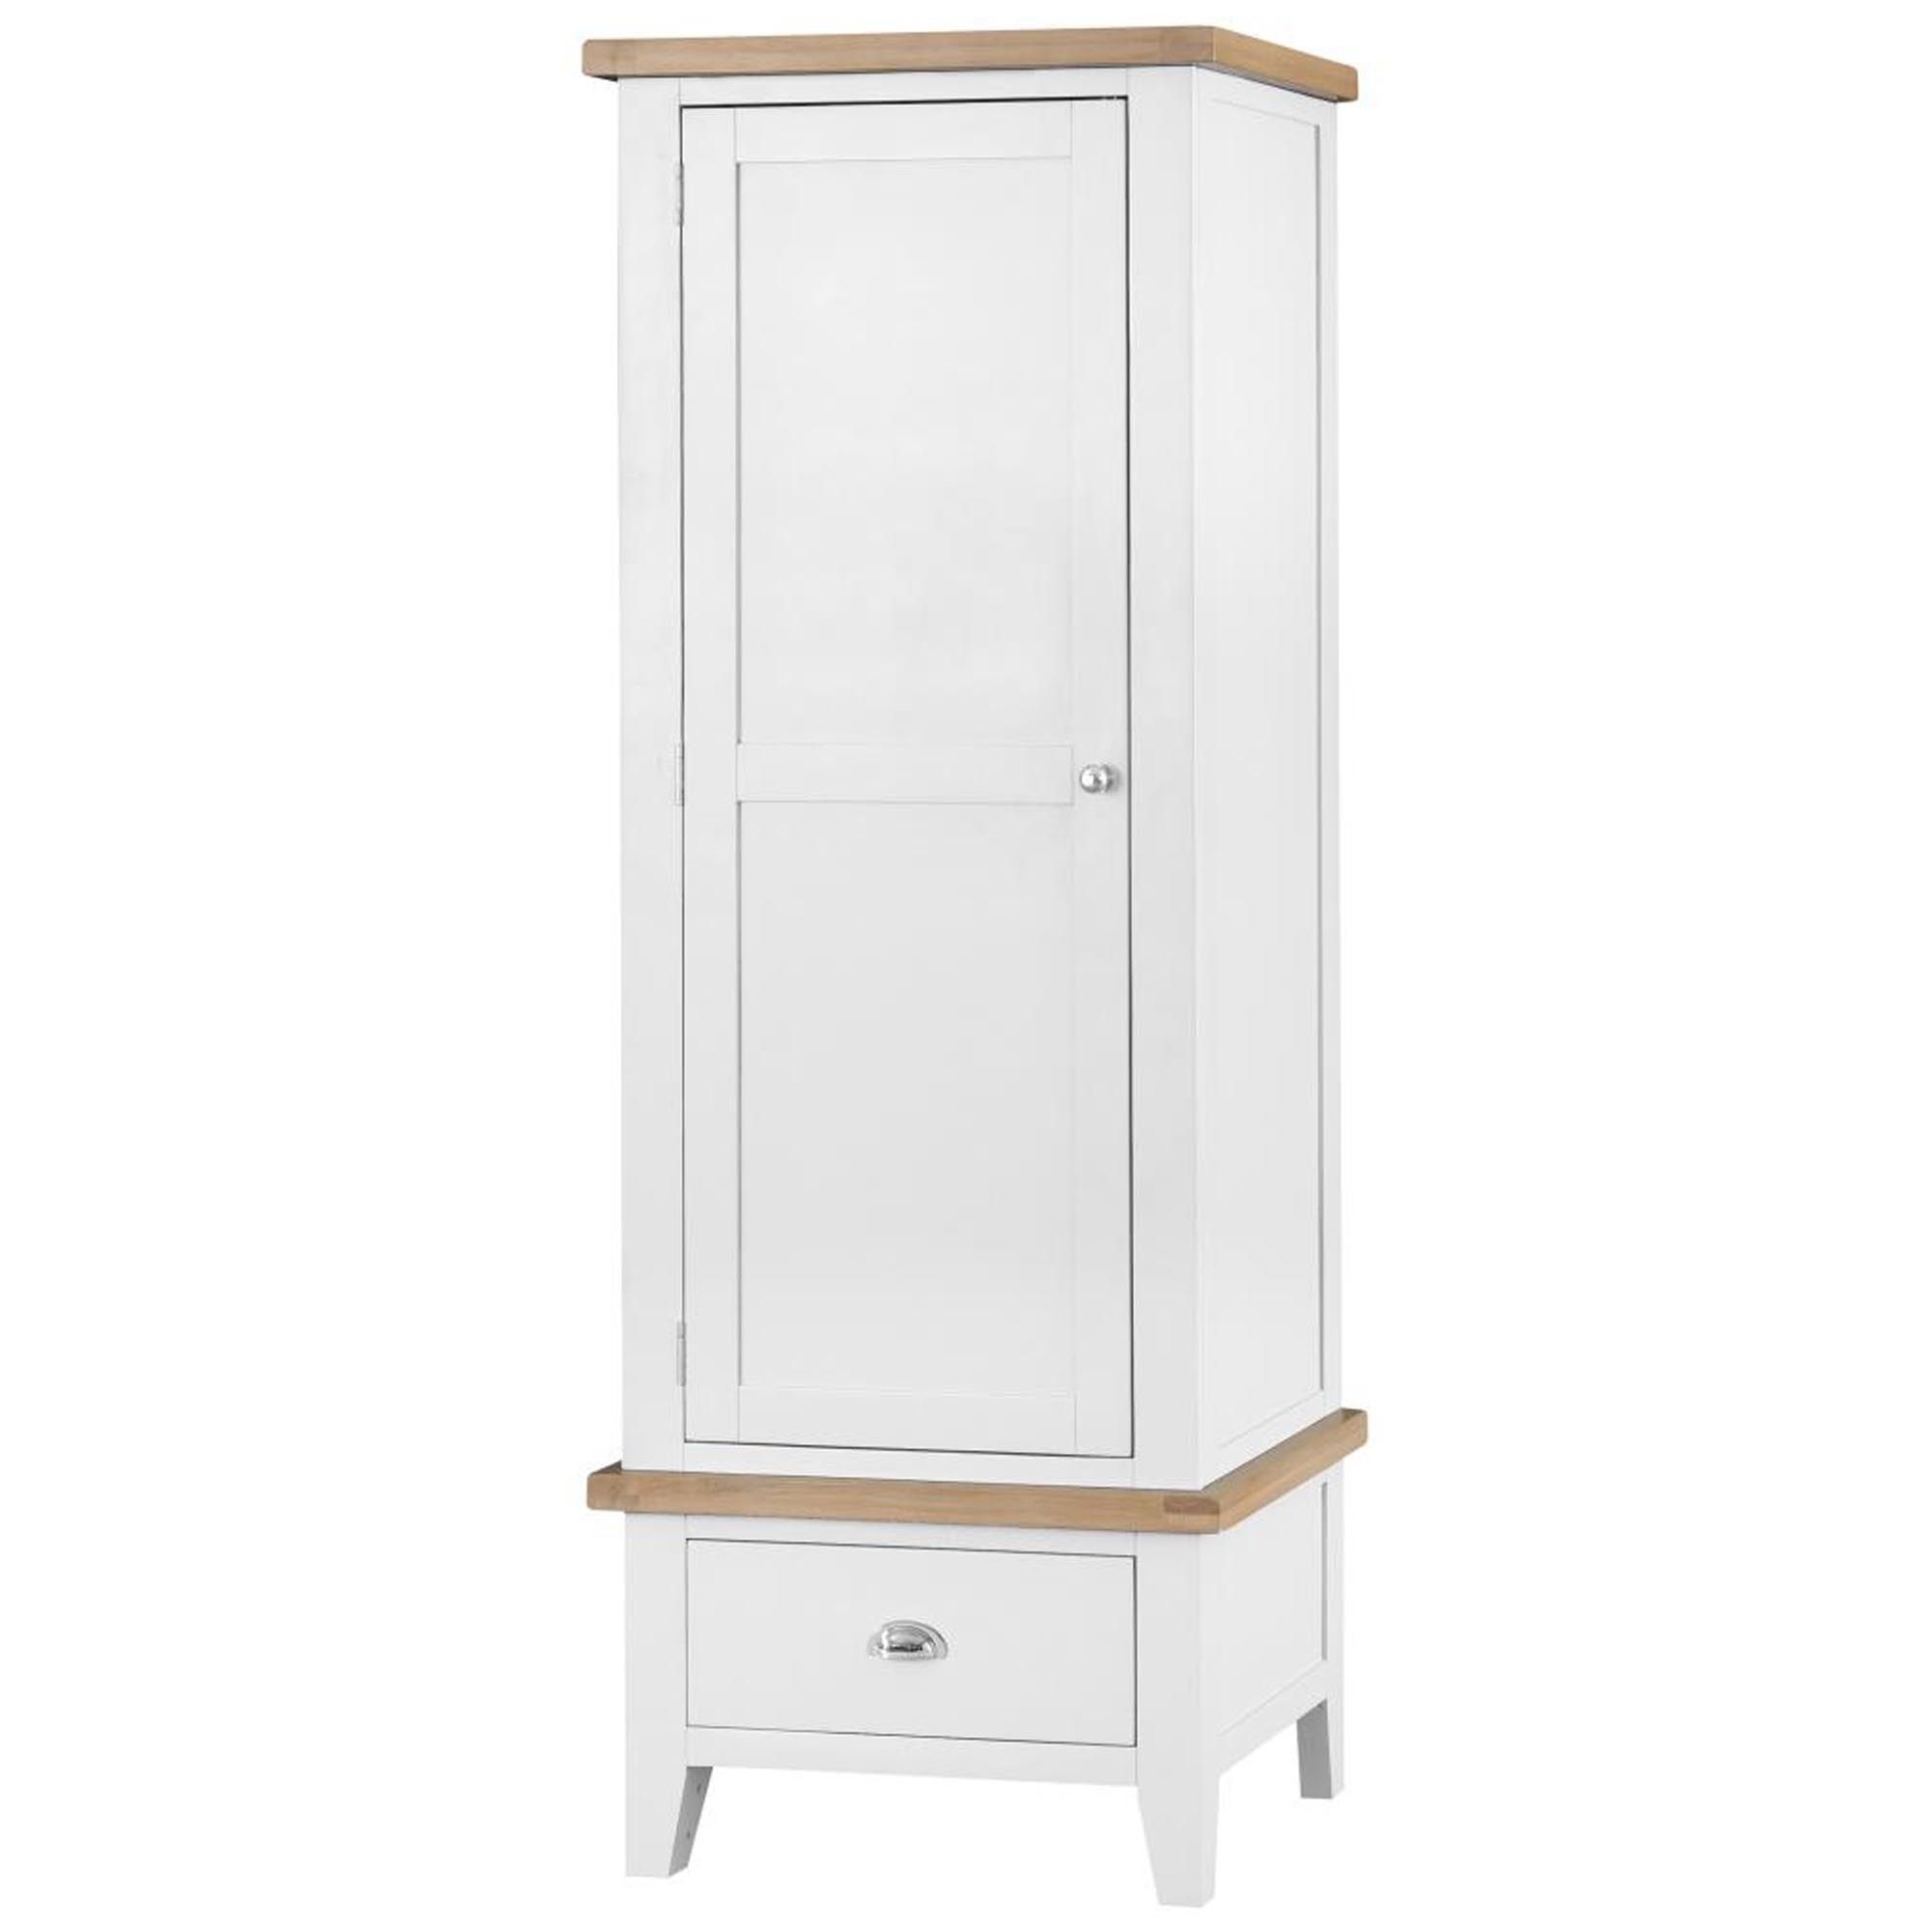 Trentino White Single Wardrobe | Bedroom Furniture | Homesdirect365 In Single White Wardrobes (View 16 of 20)